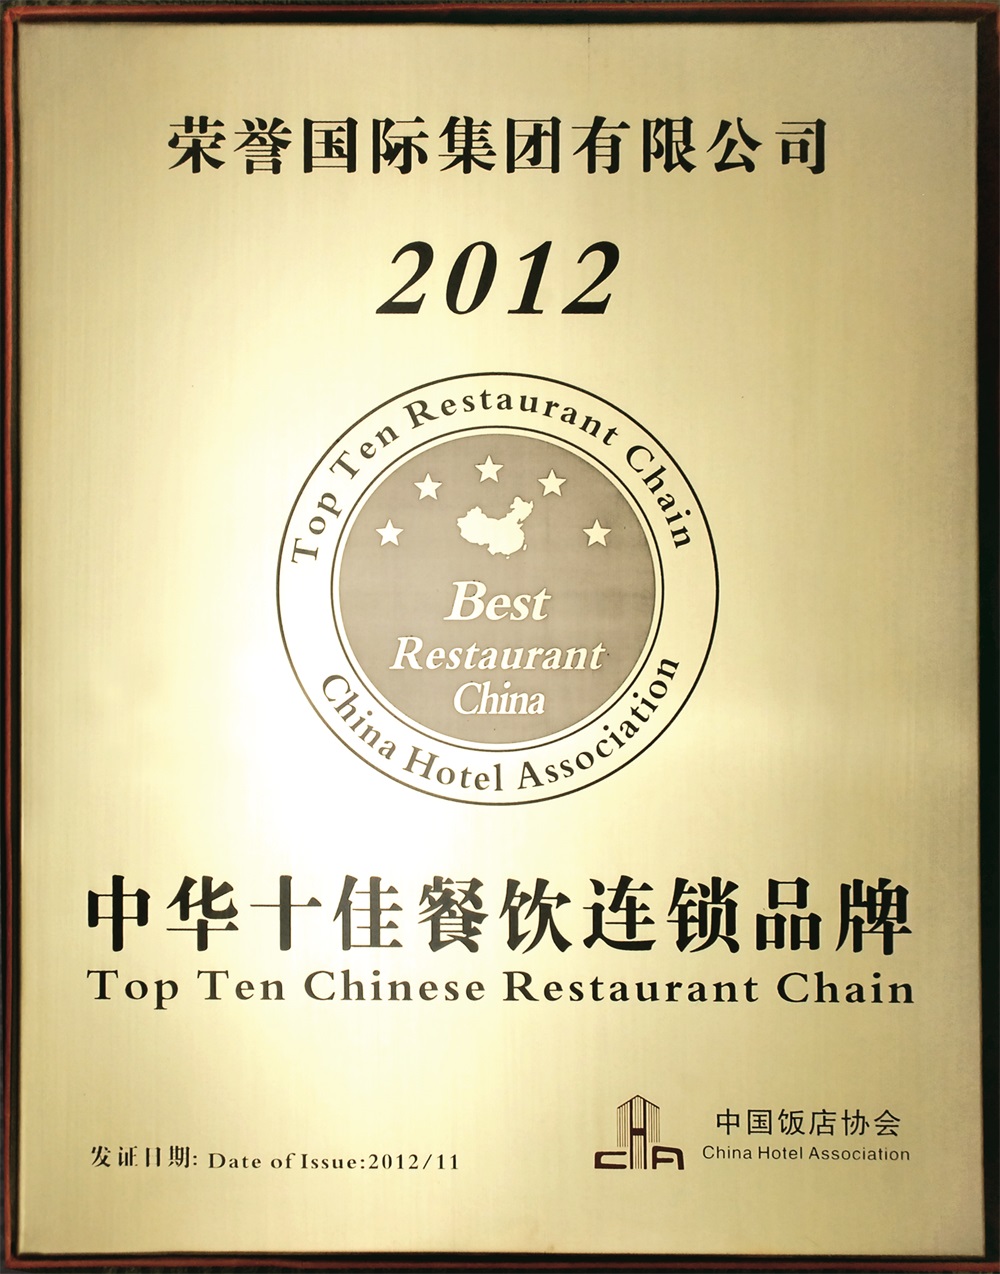 Top Ten Chinese Restaurant Chain Brands